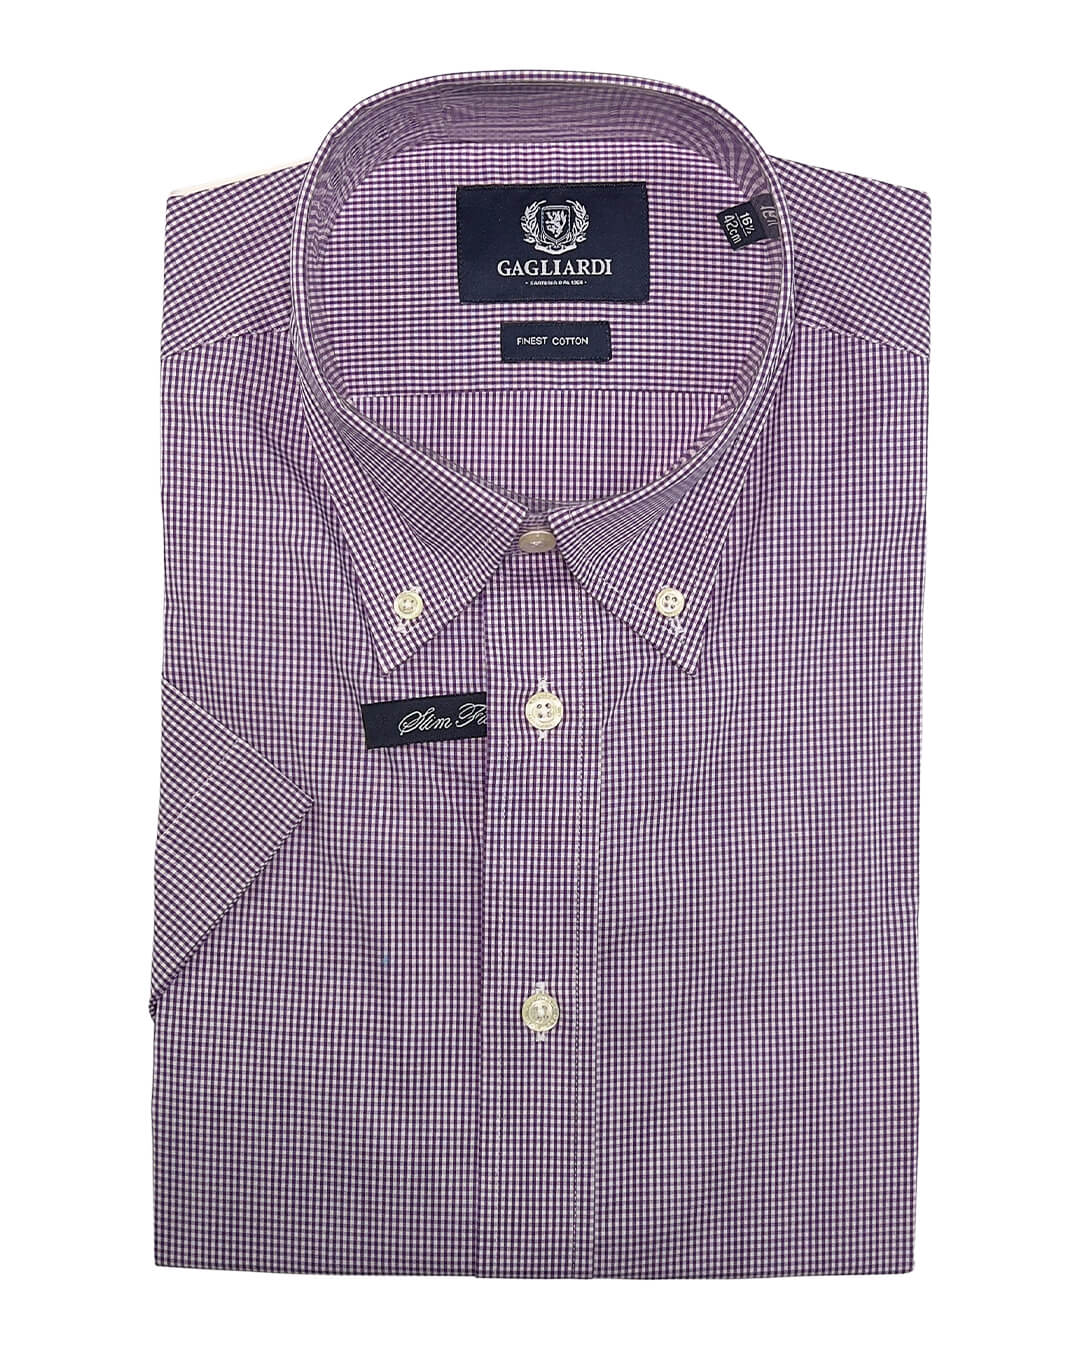 Gagliardi Shirts Gagliardi Purple Check Shirt